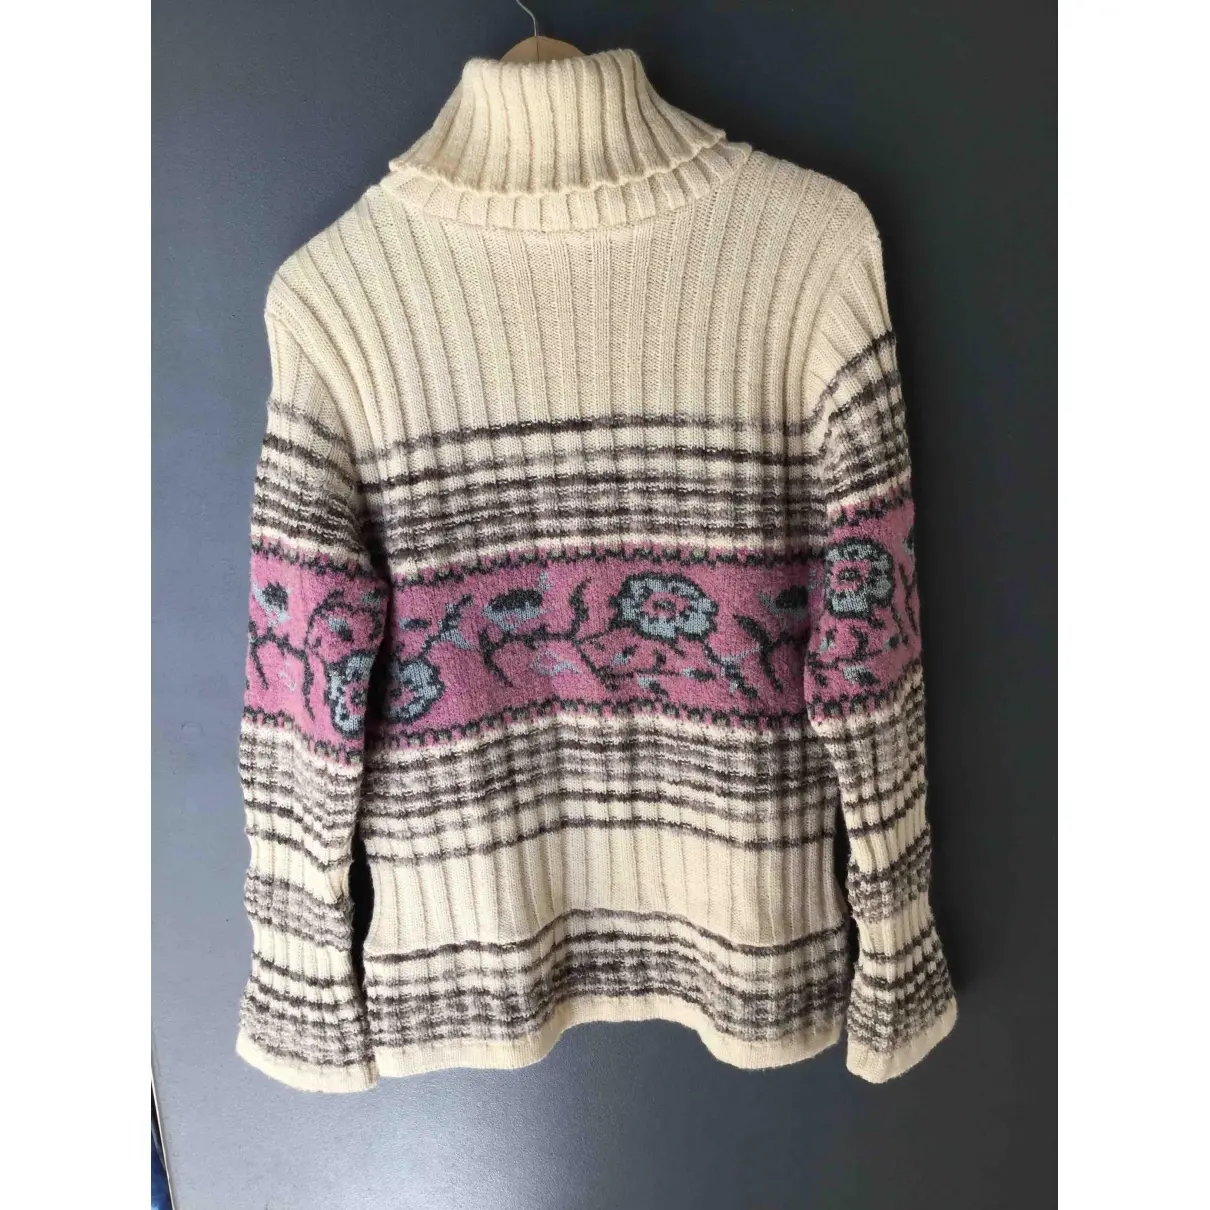 Christian Lacroix Wool jumper for sale - Vintage